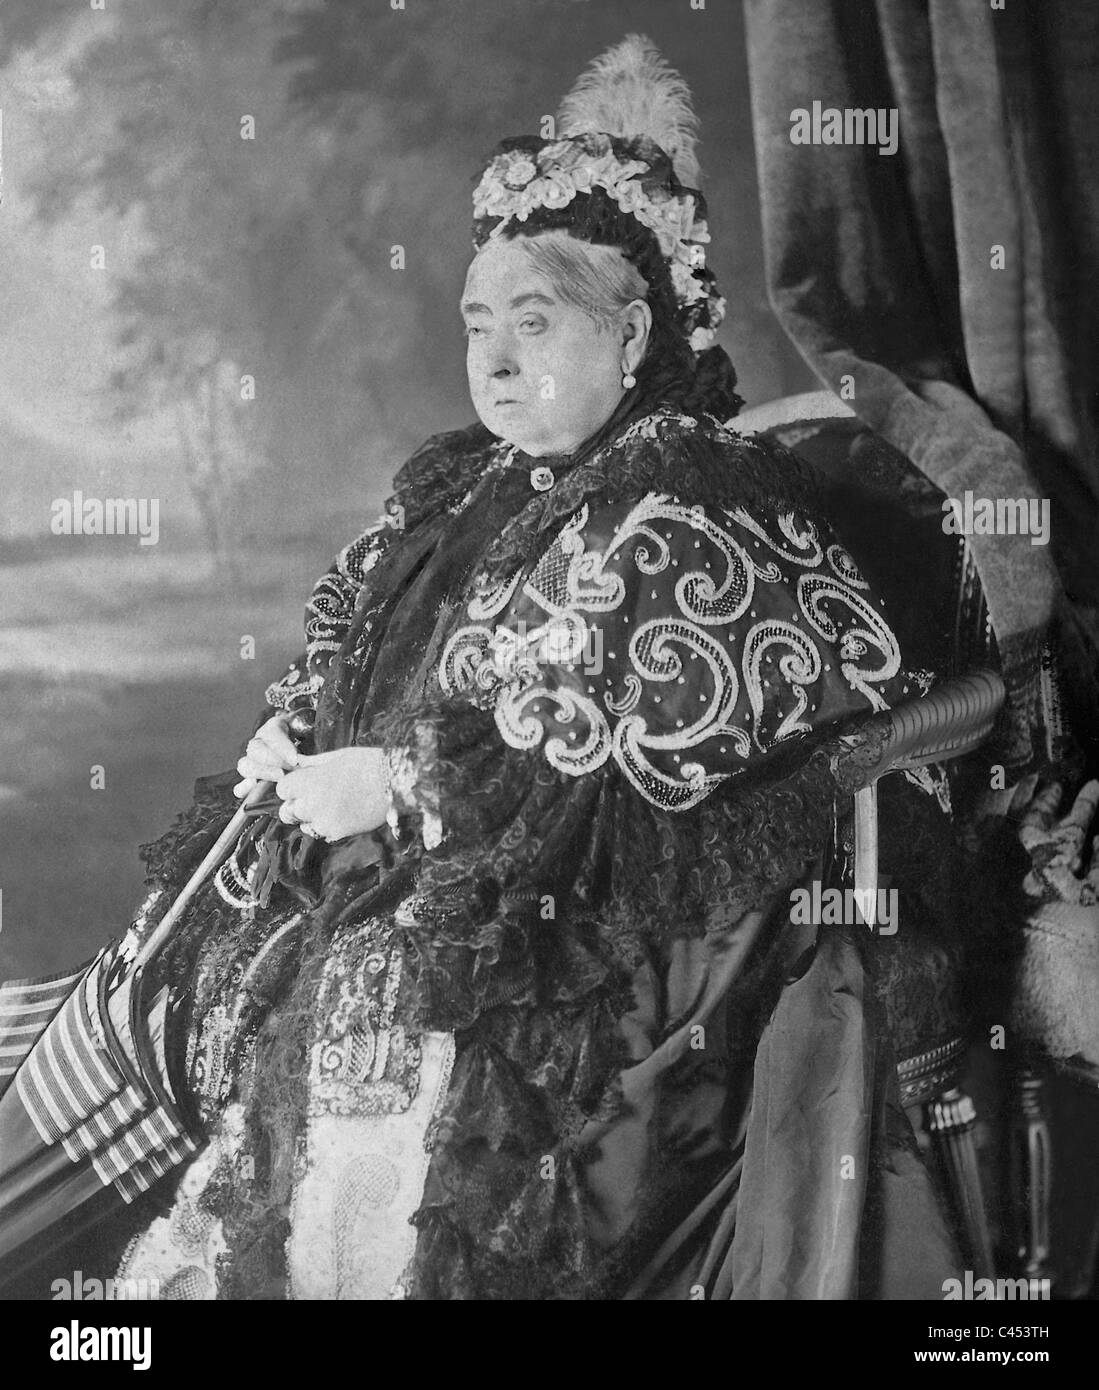 La reine Victoria d'Angleterre, 1898 Banque D'Images